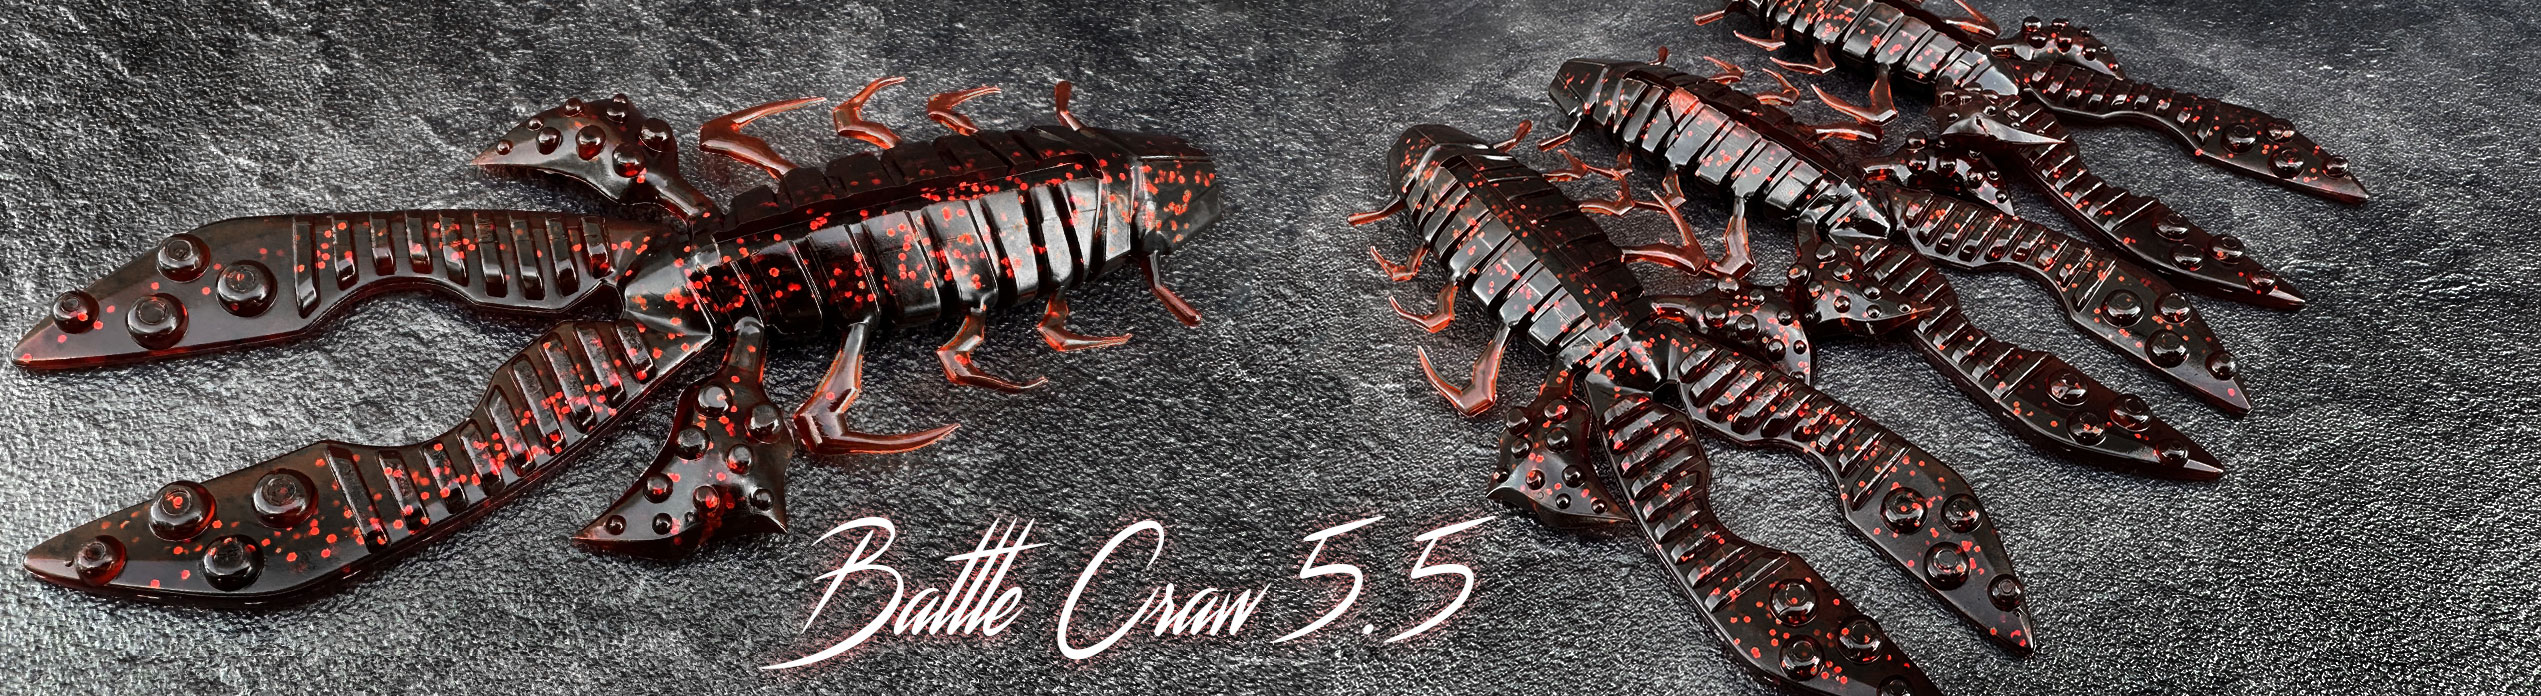 soft lure crayfish craw best fishing lures big pike perch pelagic pike perch black bass catfish